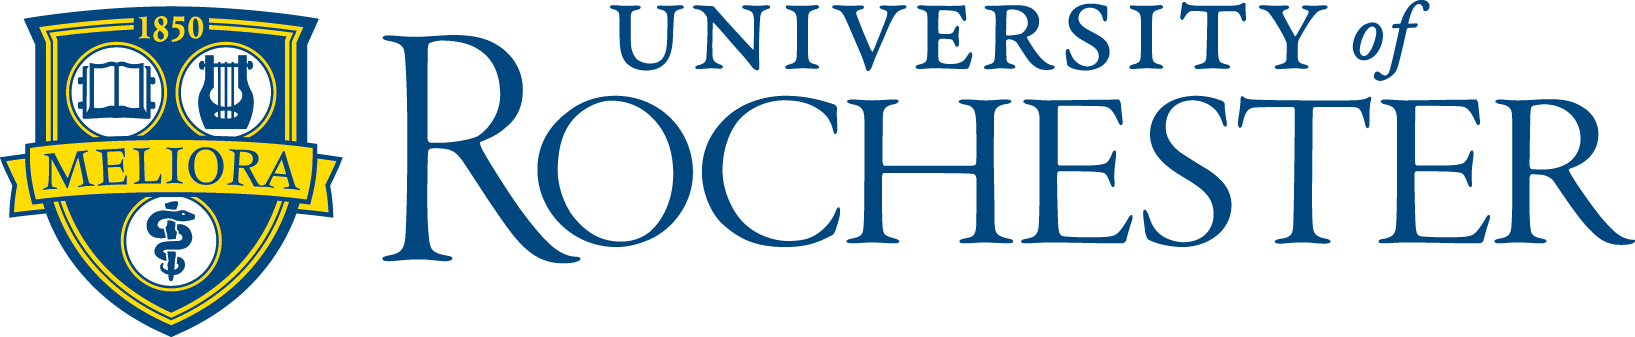 U of R Logo - Symbols - About Us - University of Rochester